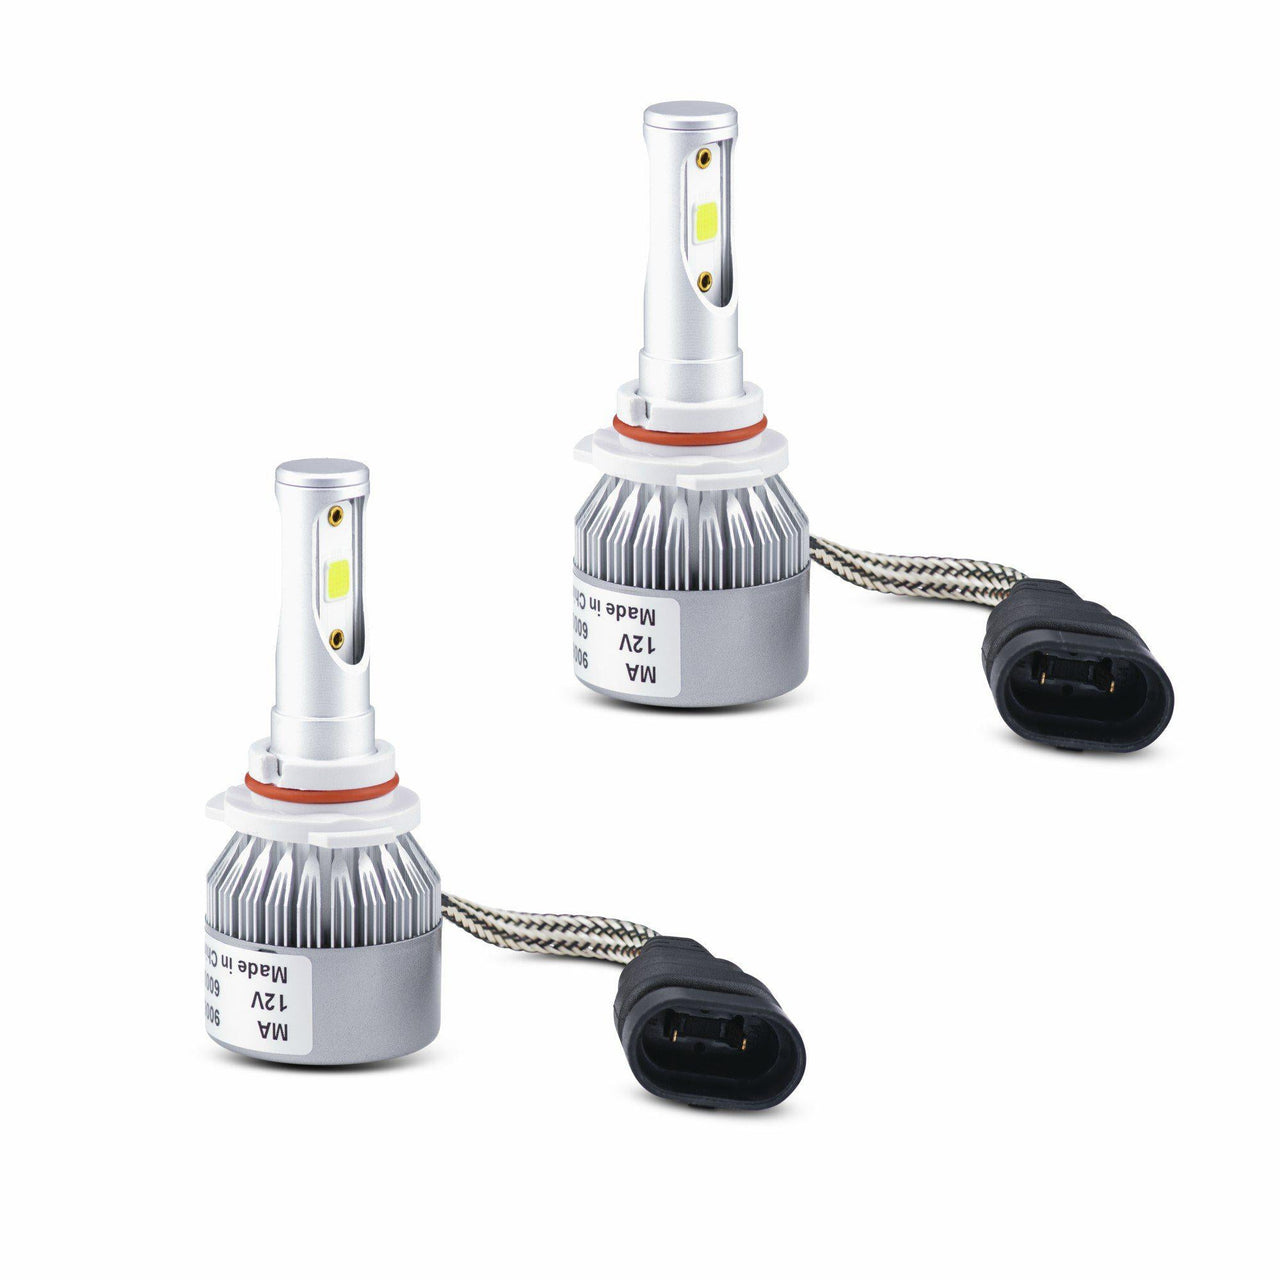 For Nissan Rogue 2017-18 H11 LED Headlight Beam Light Bulbs Conversion Kit Xenon White